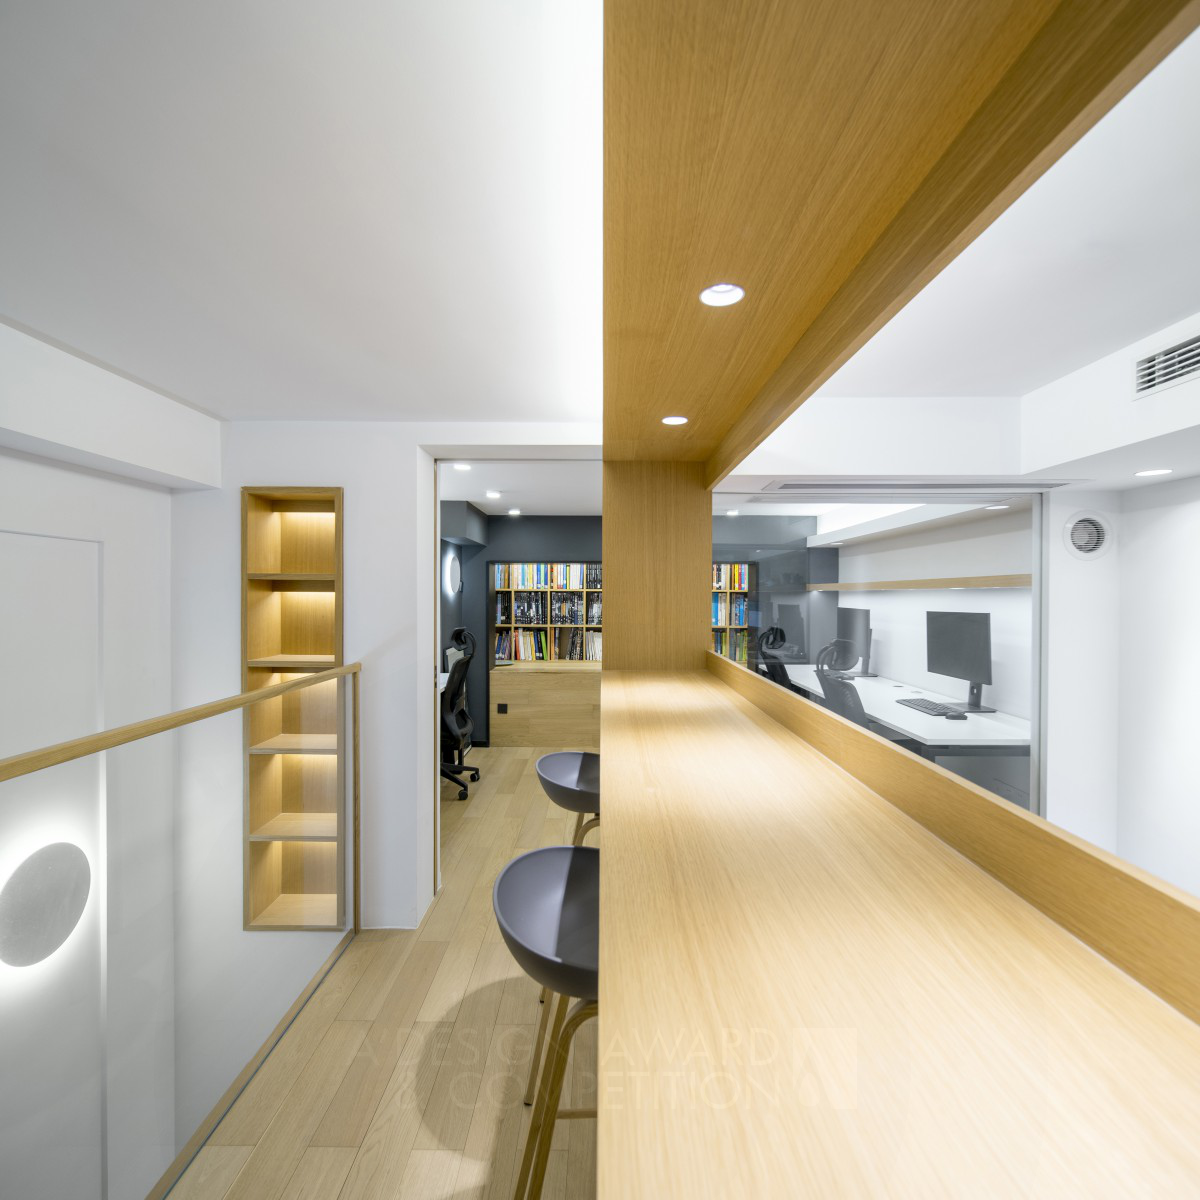 Jiruishe Loft Office Interior Design by He Wang and Hancui Lu